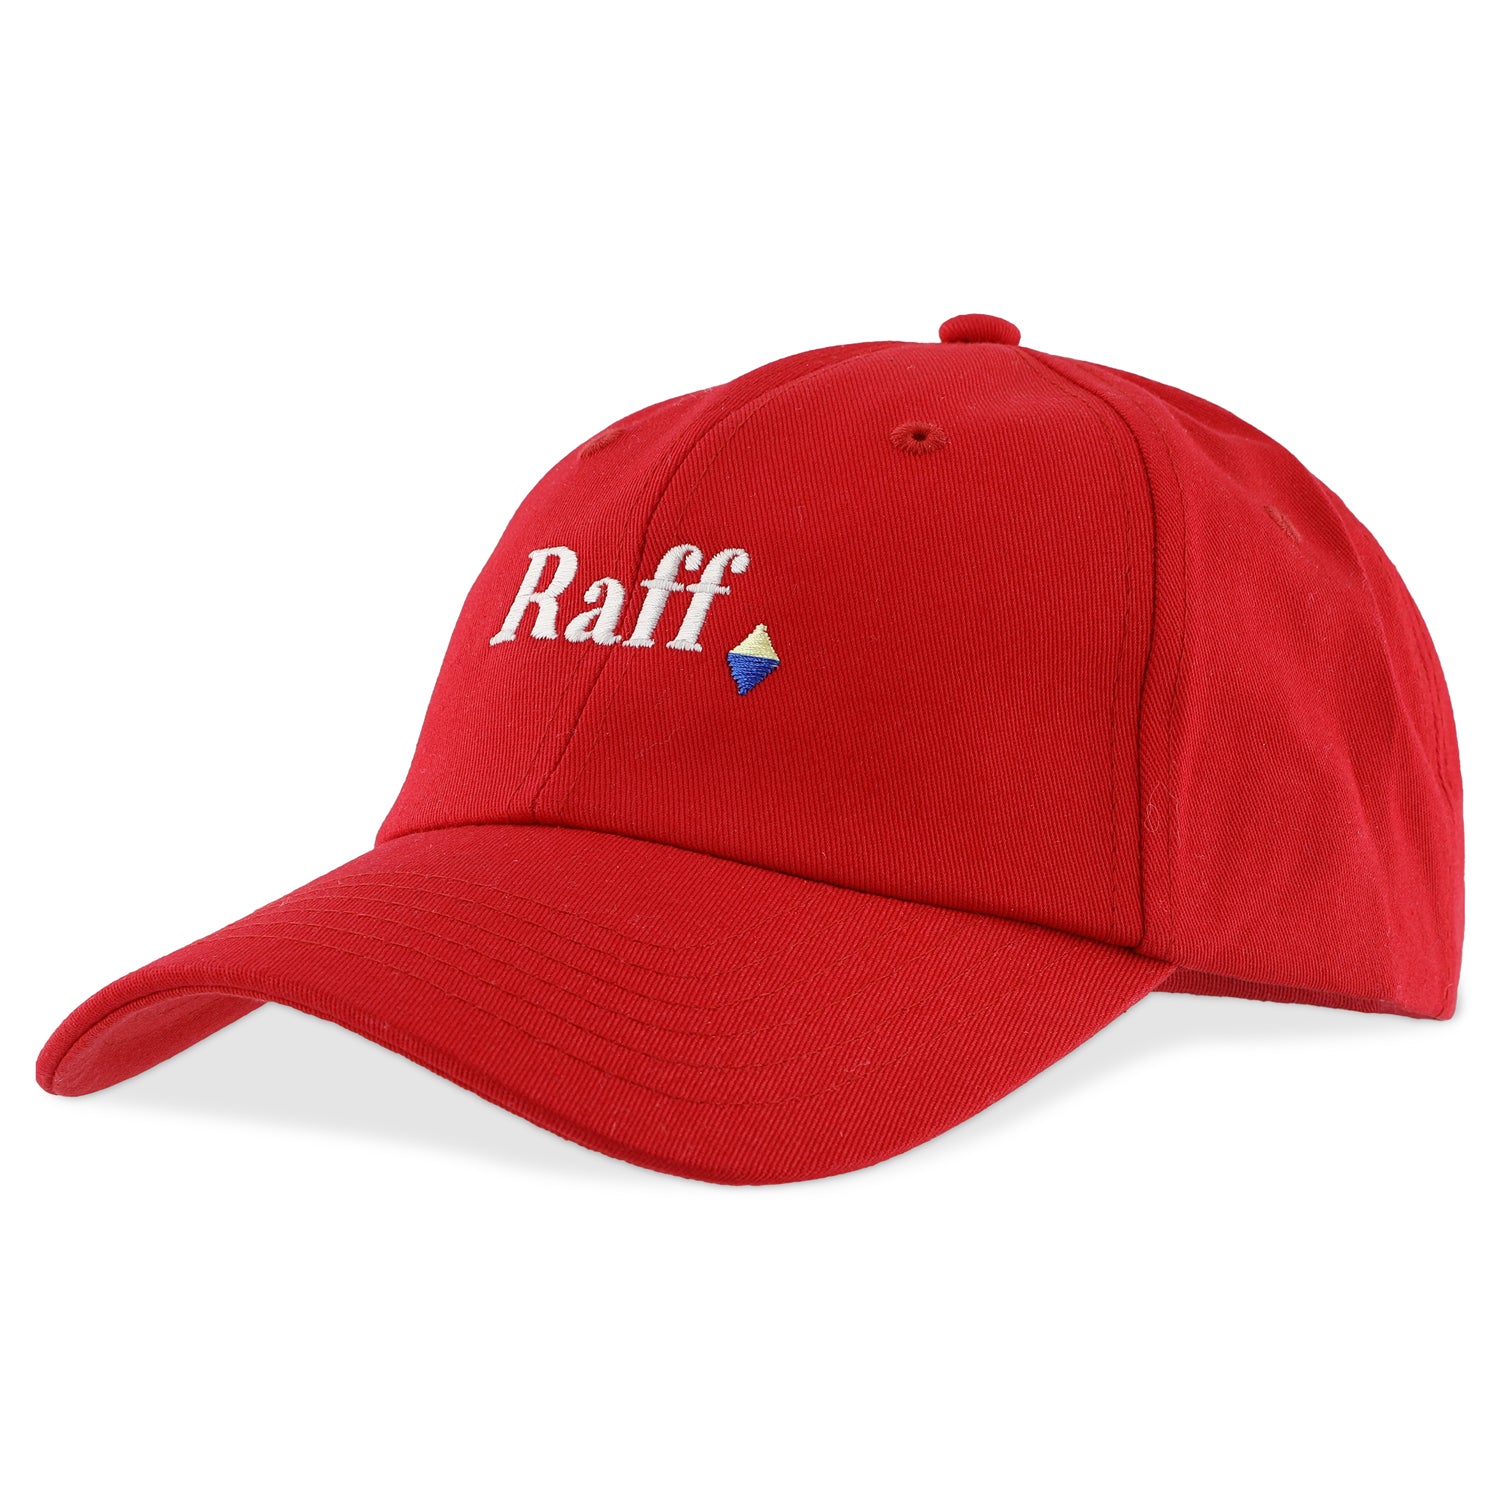 Raff Cap Red